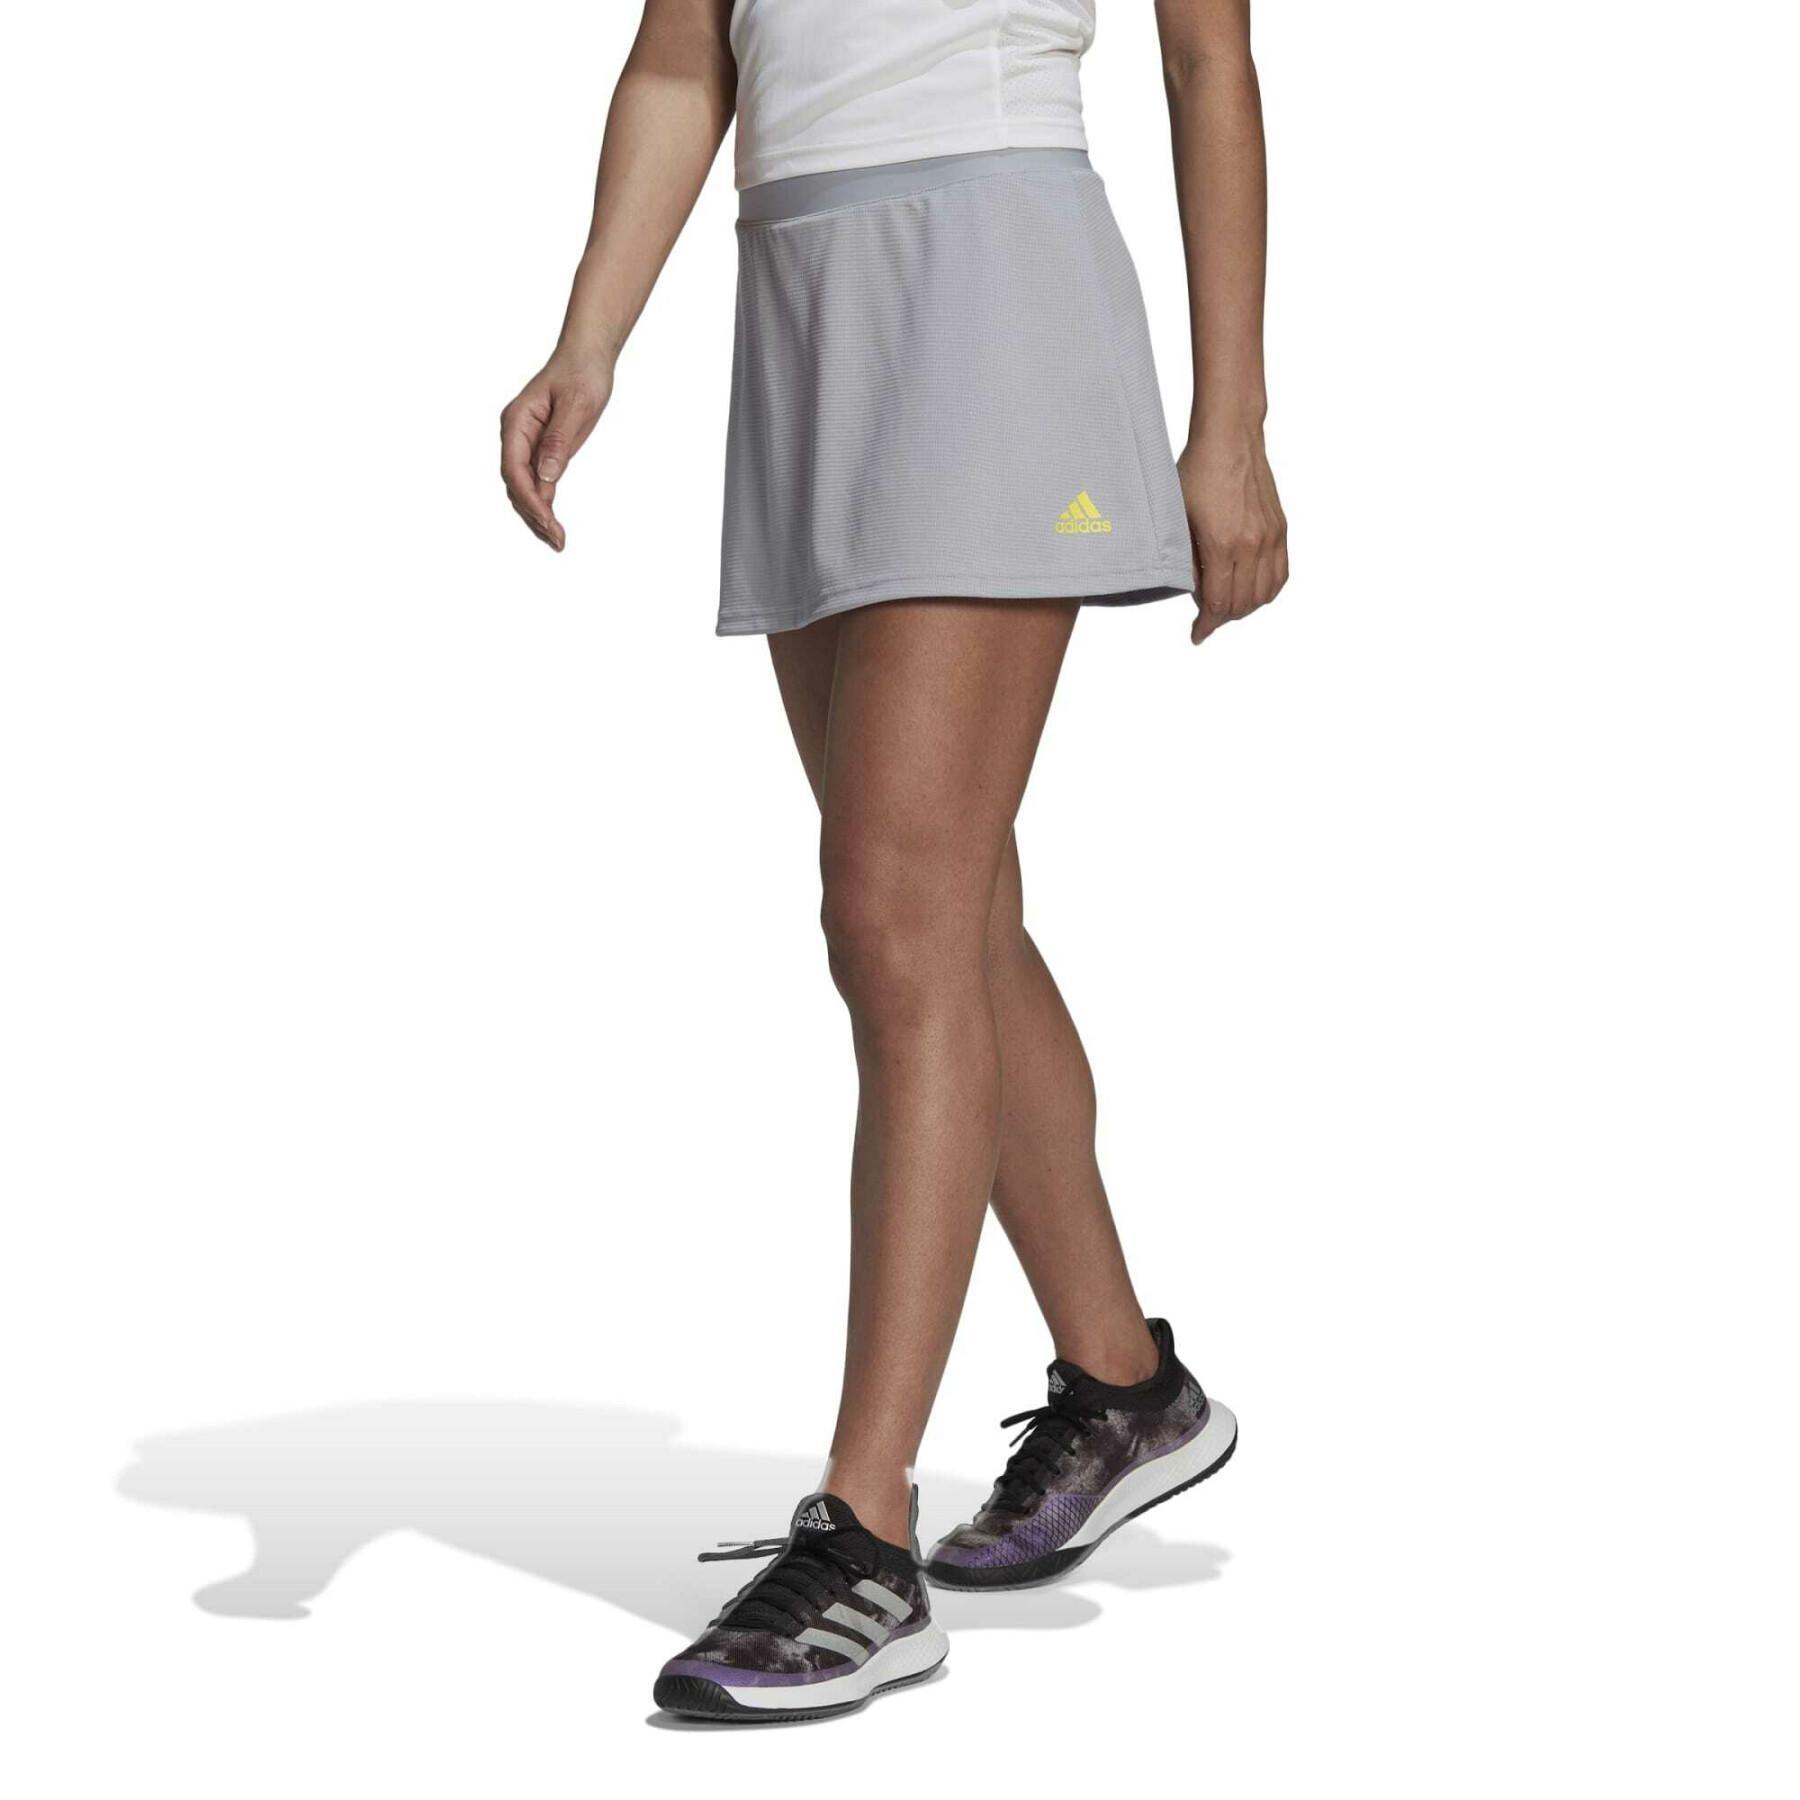 Women's tennis club skirt adidas